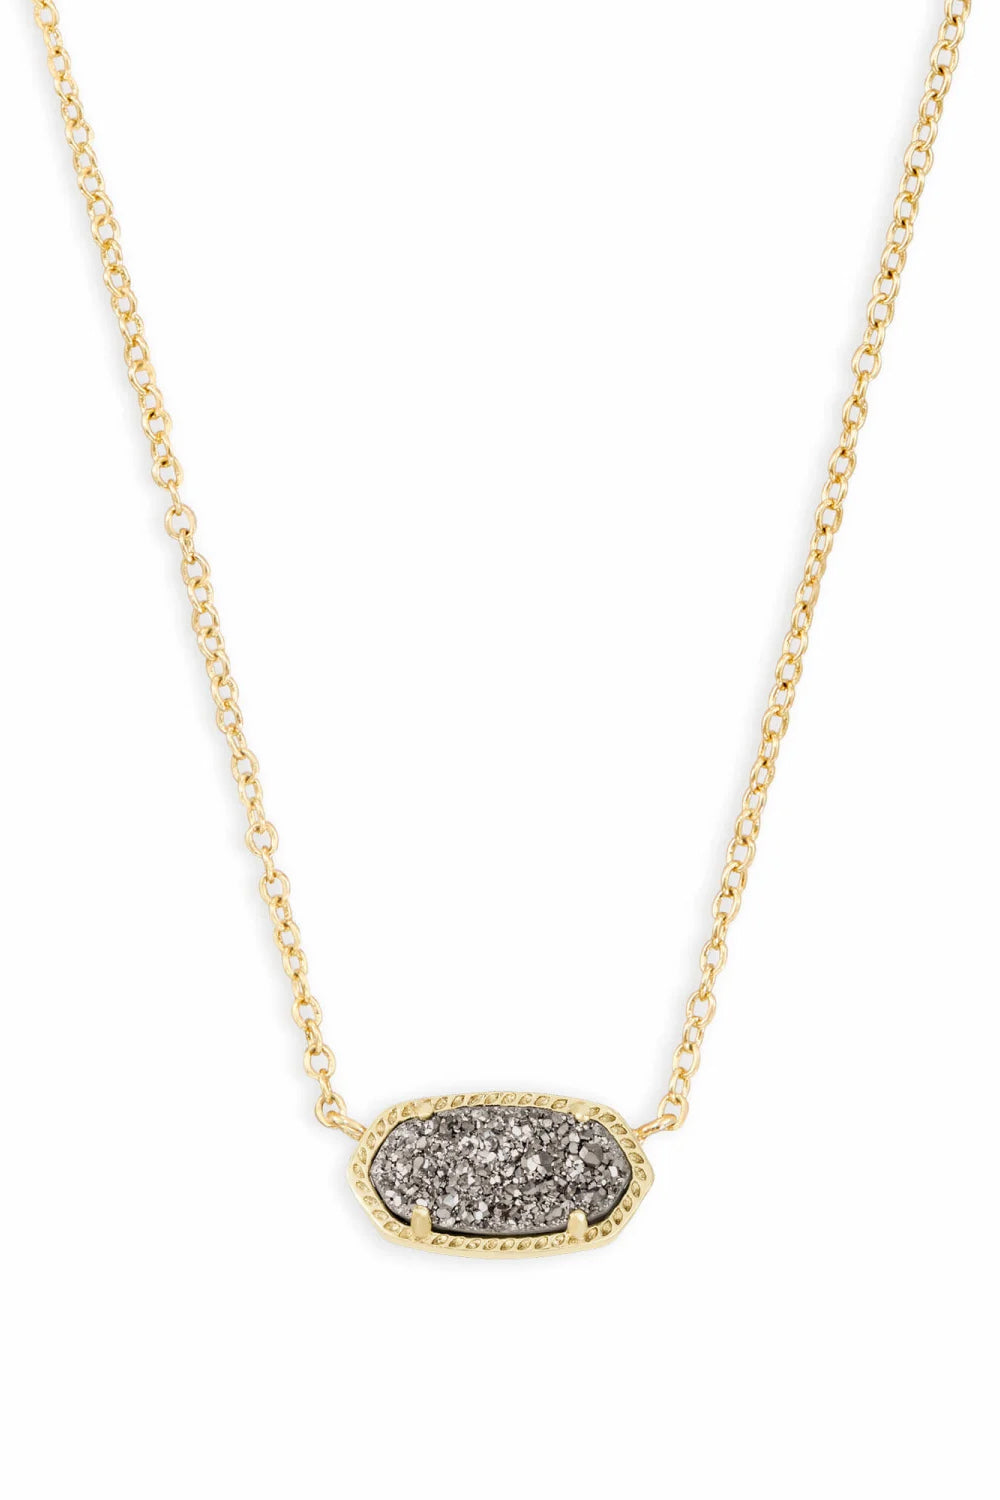 Kendra Scott: Elisa Gold Chain Necklace - Platinum Drusy | Makk Fashions